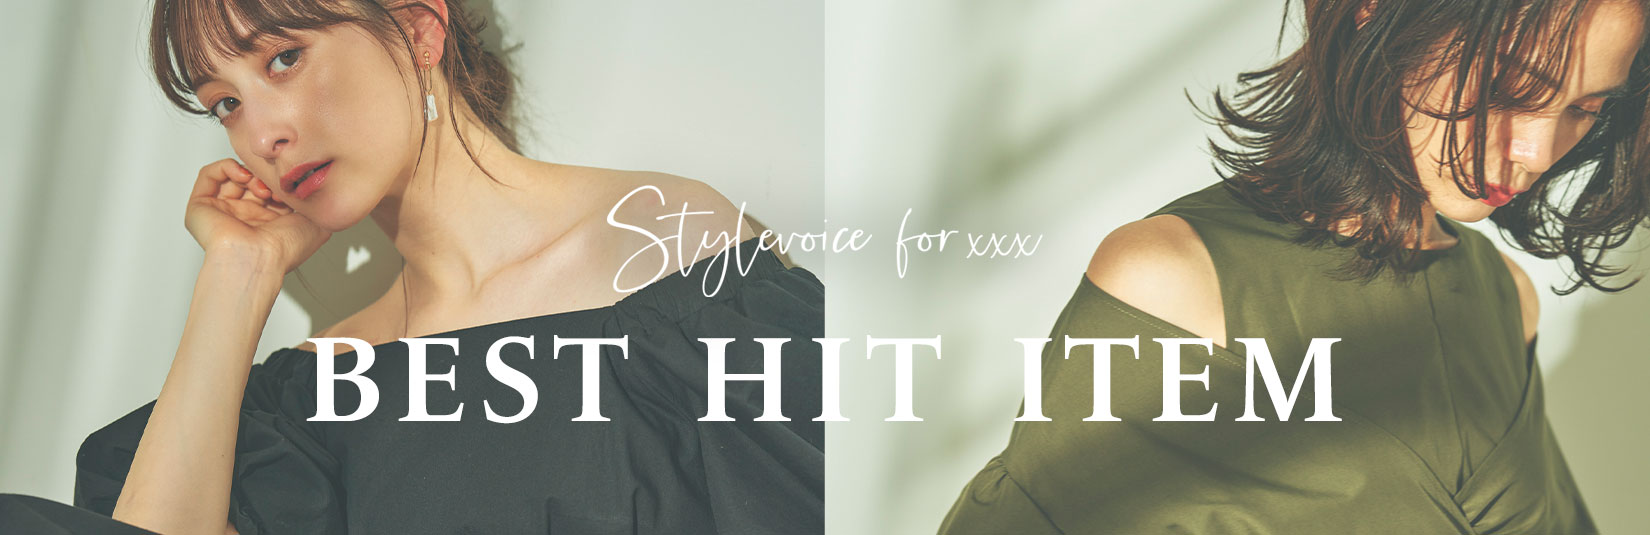 Stylevoice for xxx 春夏コレクションBEST HIT ITEM